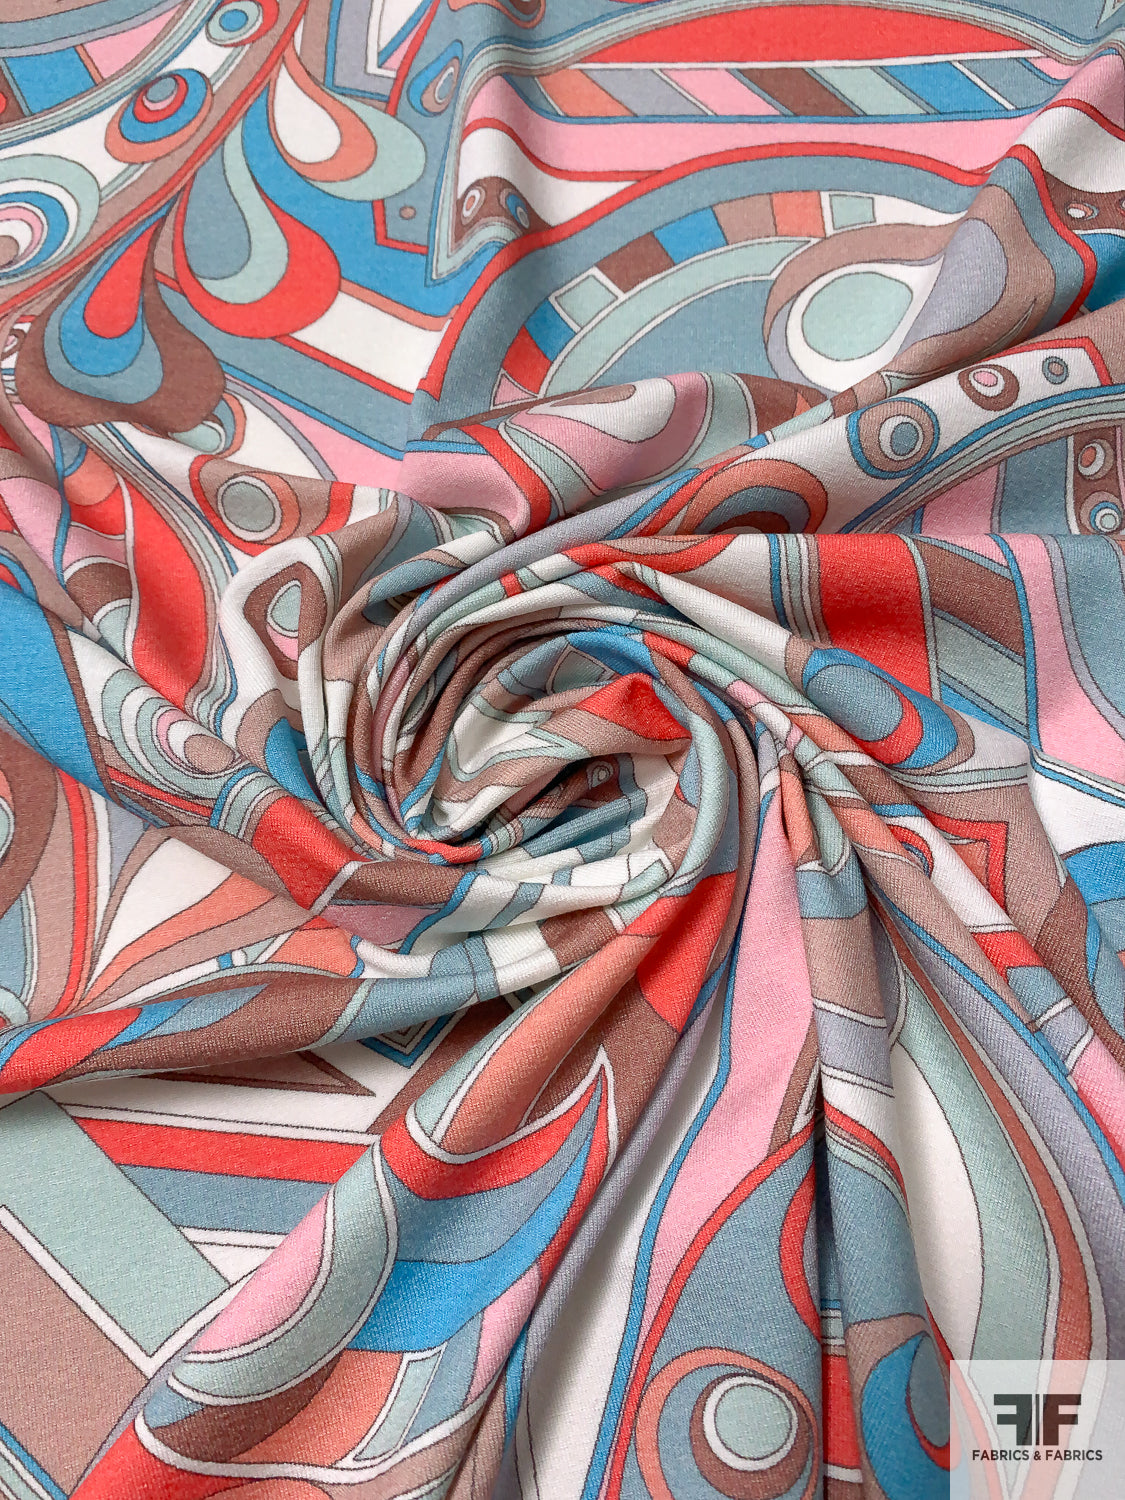 Pucci-esque Paisley Printed Stretch Jersey Knit - Deep Coral/Blues/Browns/Pink  | FABRICS & FABRICS – Fabrics & Fabrics